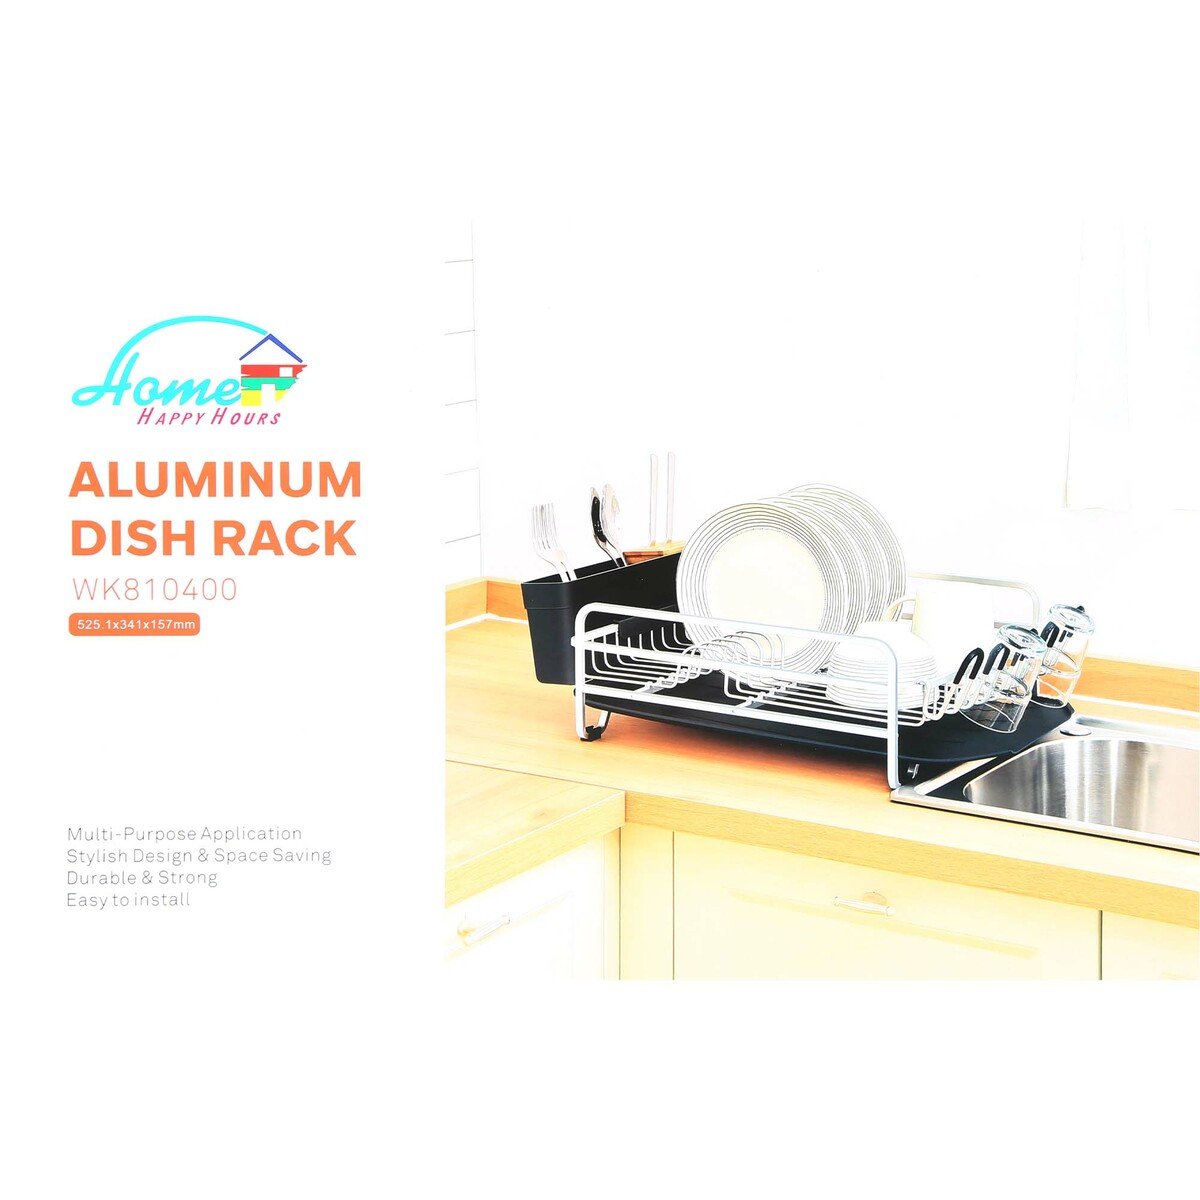 Home Aluminum Dish Rack WK810400